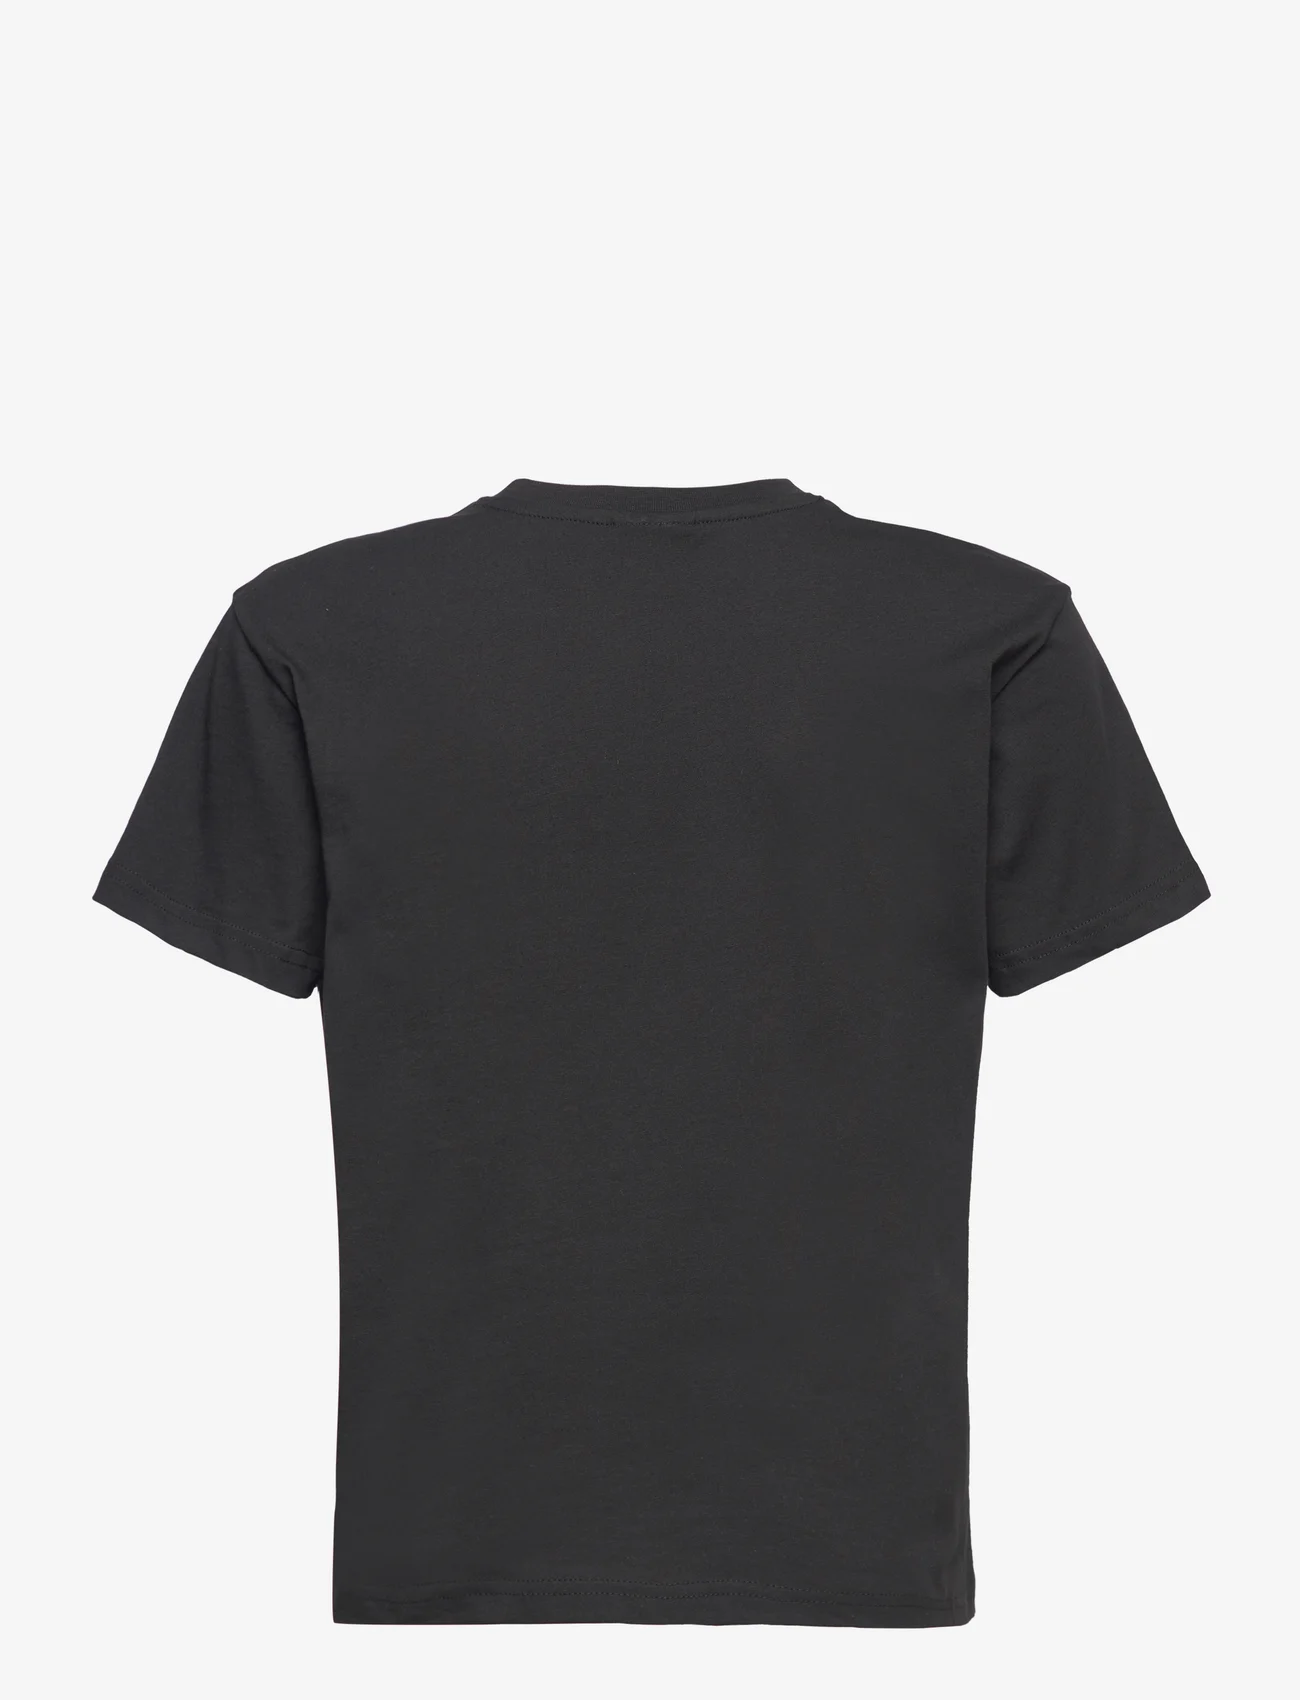 Sofie Schnoor Young - T-shirt - kortærmede t-shirts - black - 1